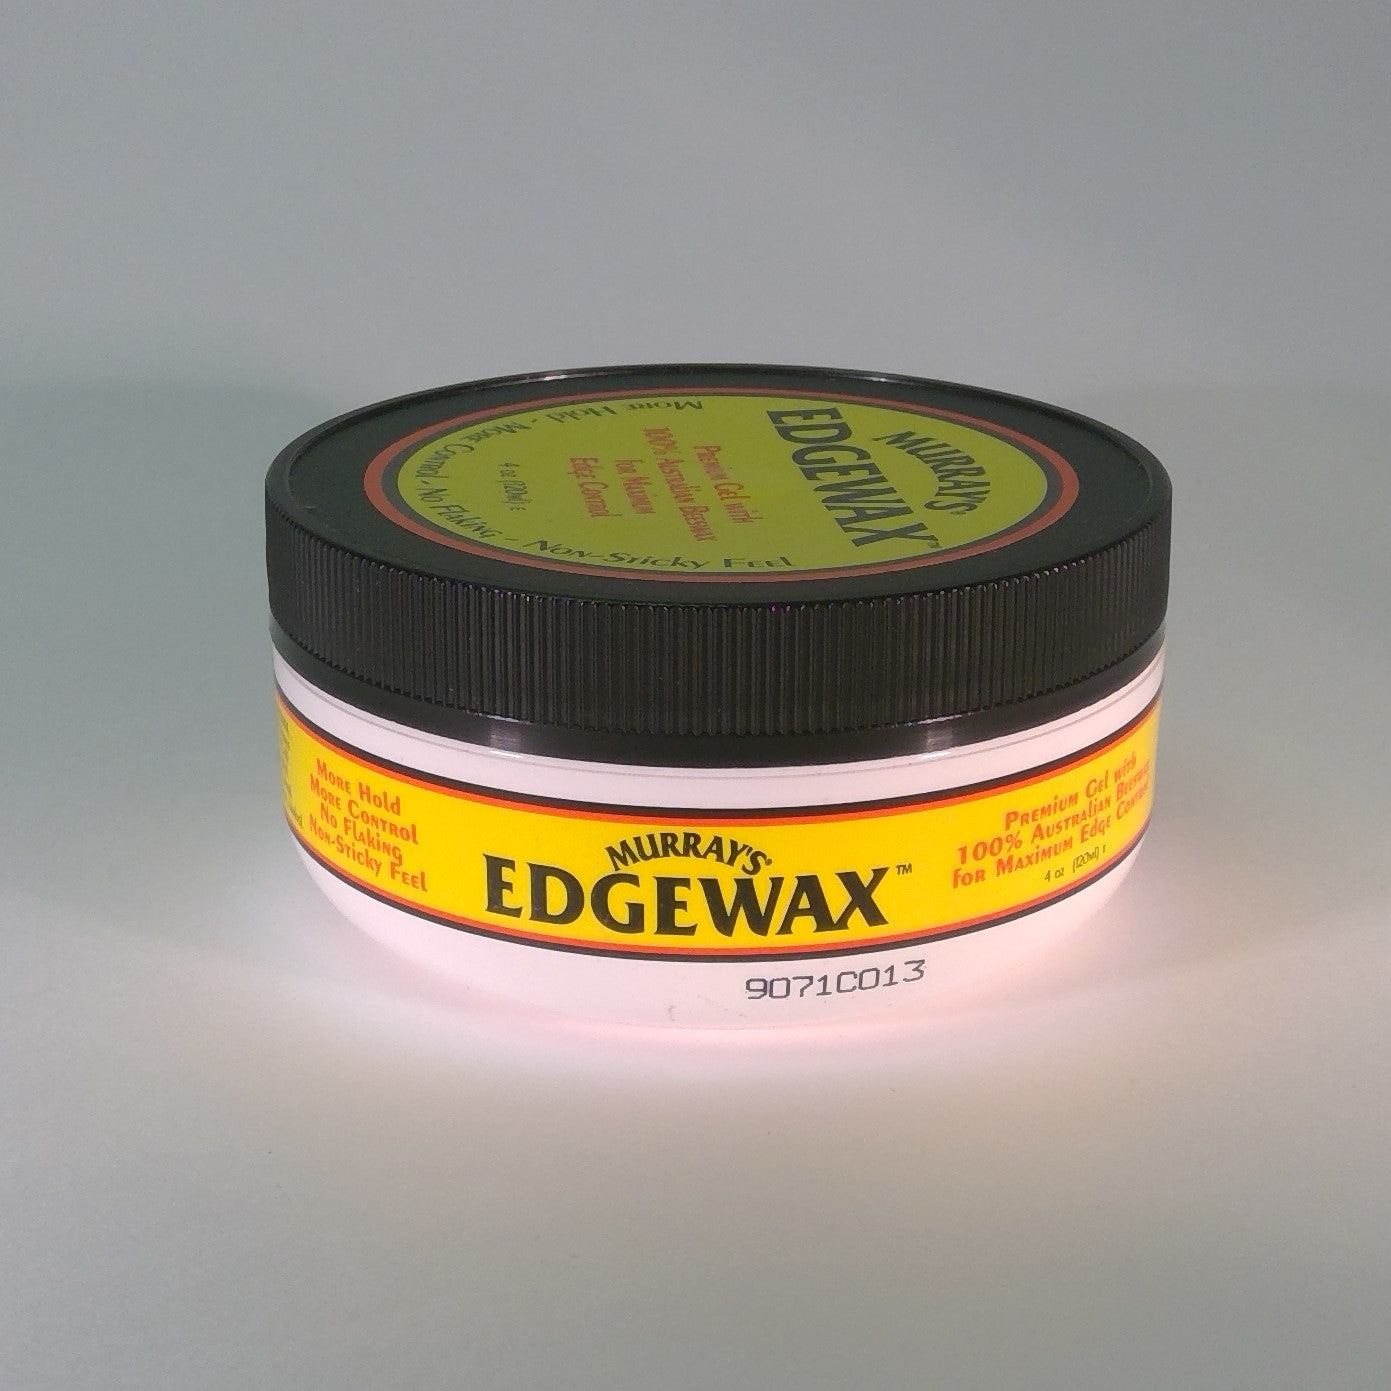 Murray's Edgewax Premium Shine Hair Styling Gel, 4 oz